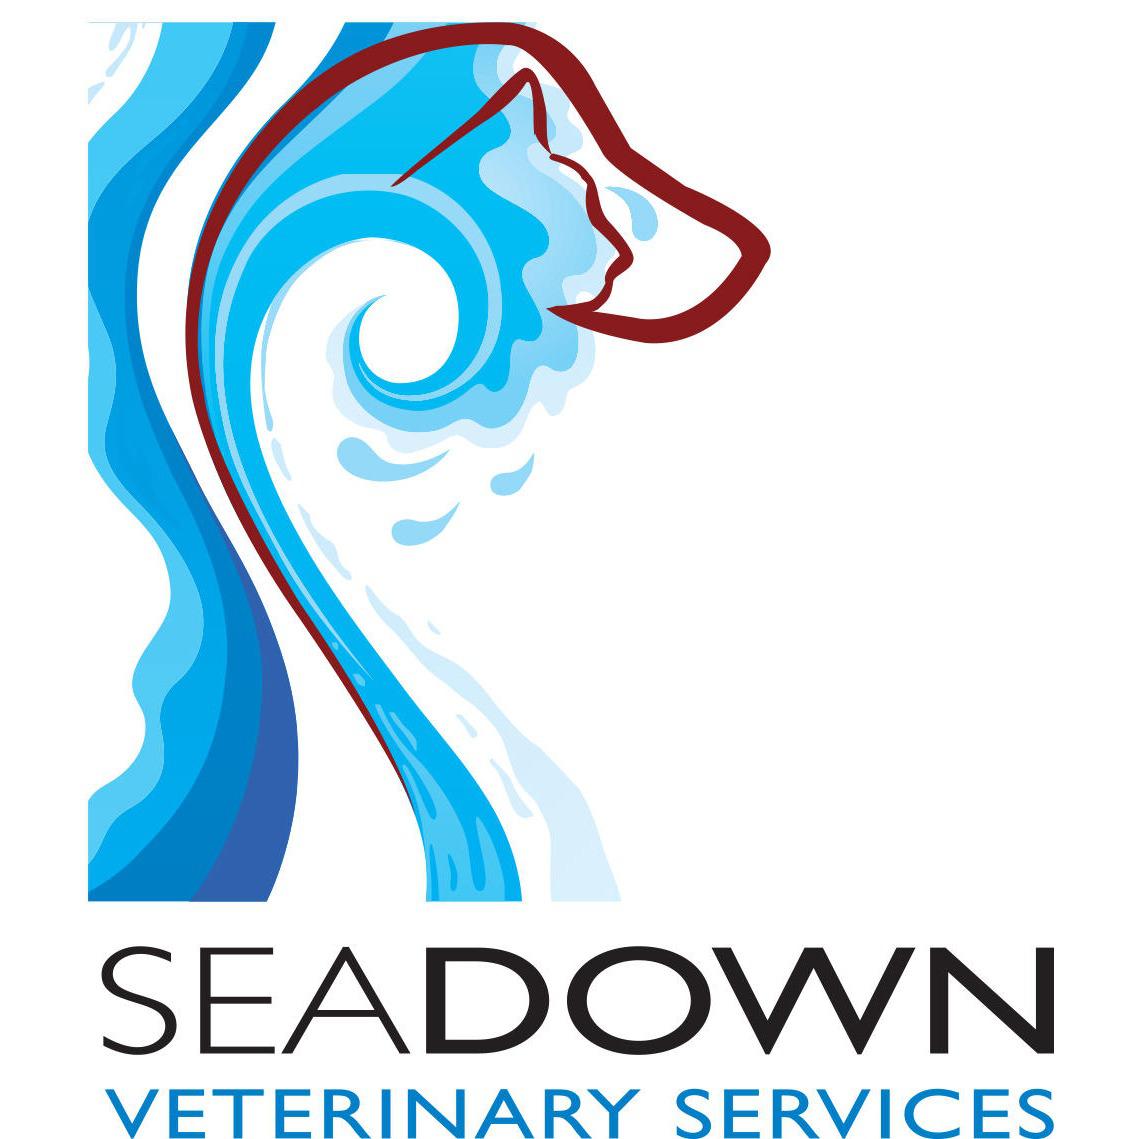 Seadown Veterinary Services - Totton Surgery Logo